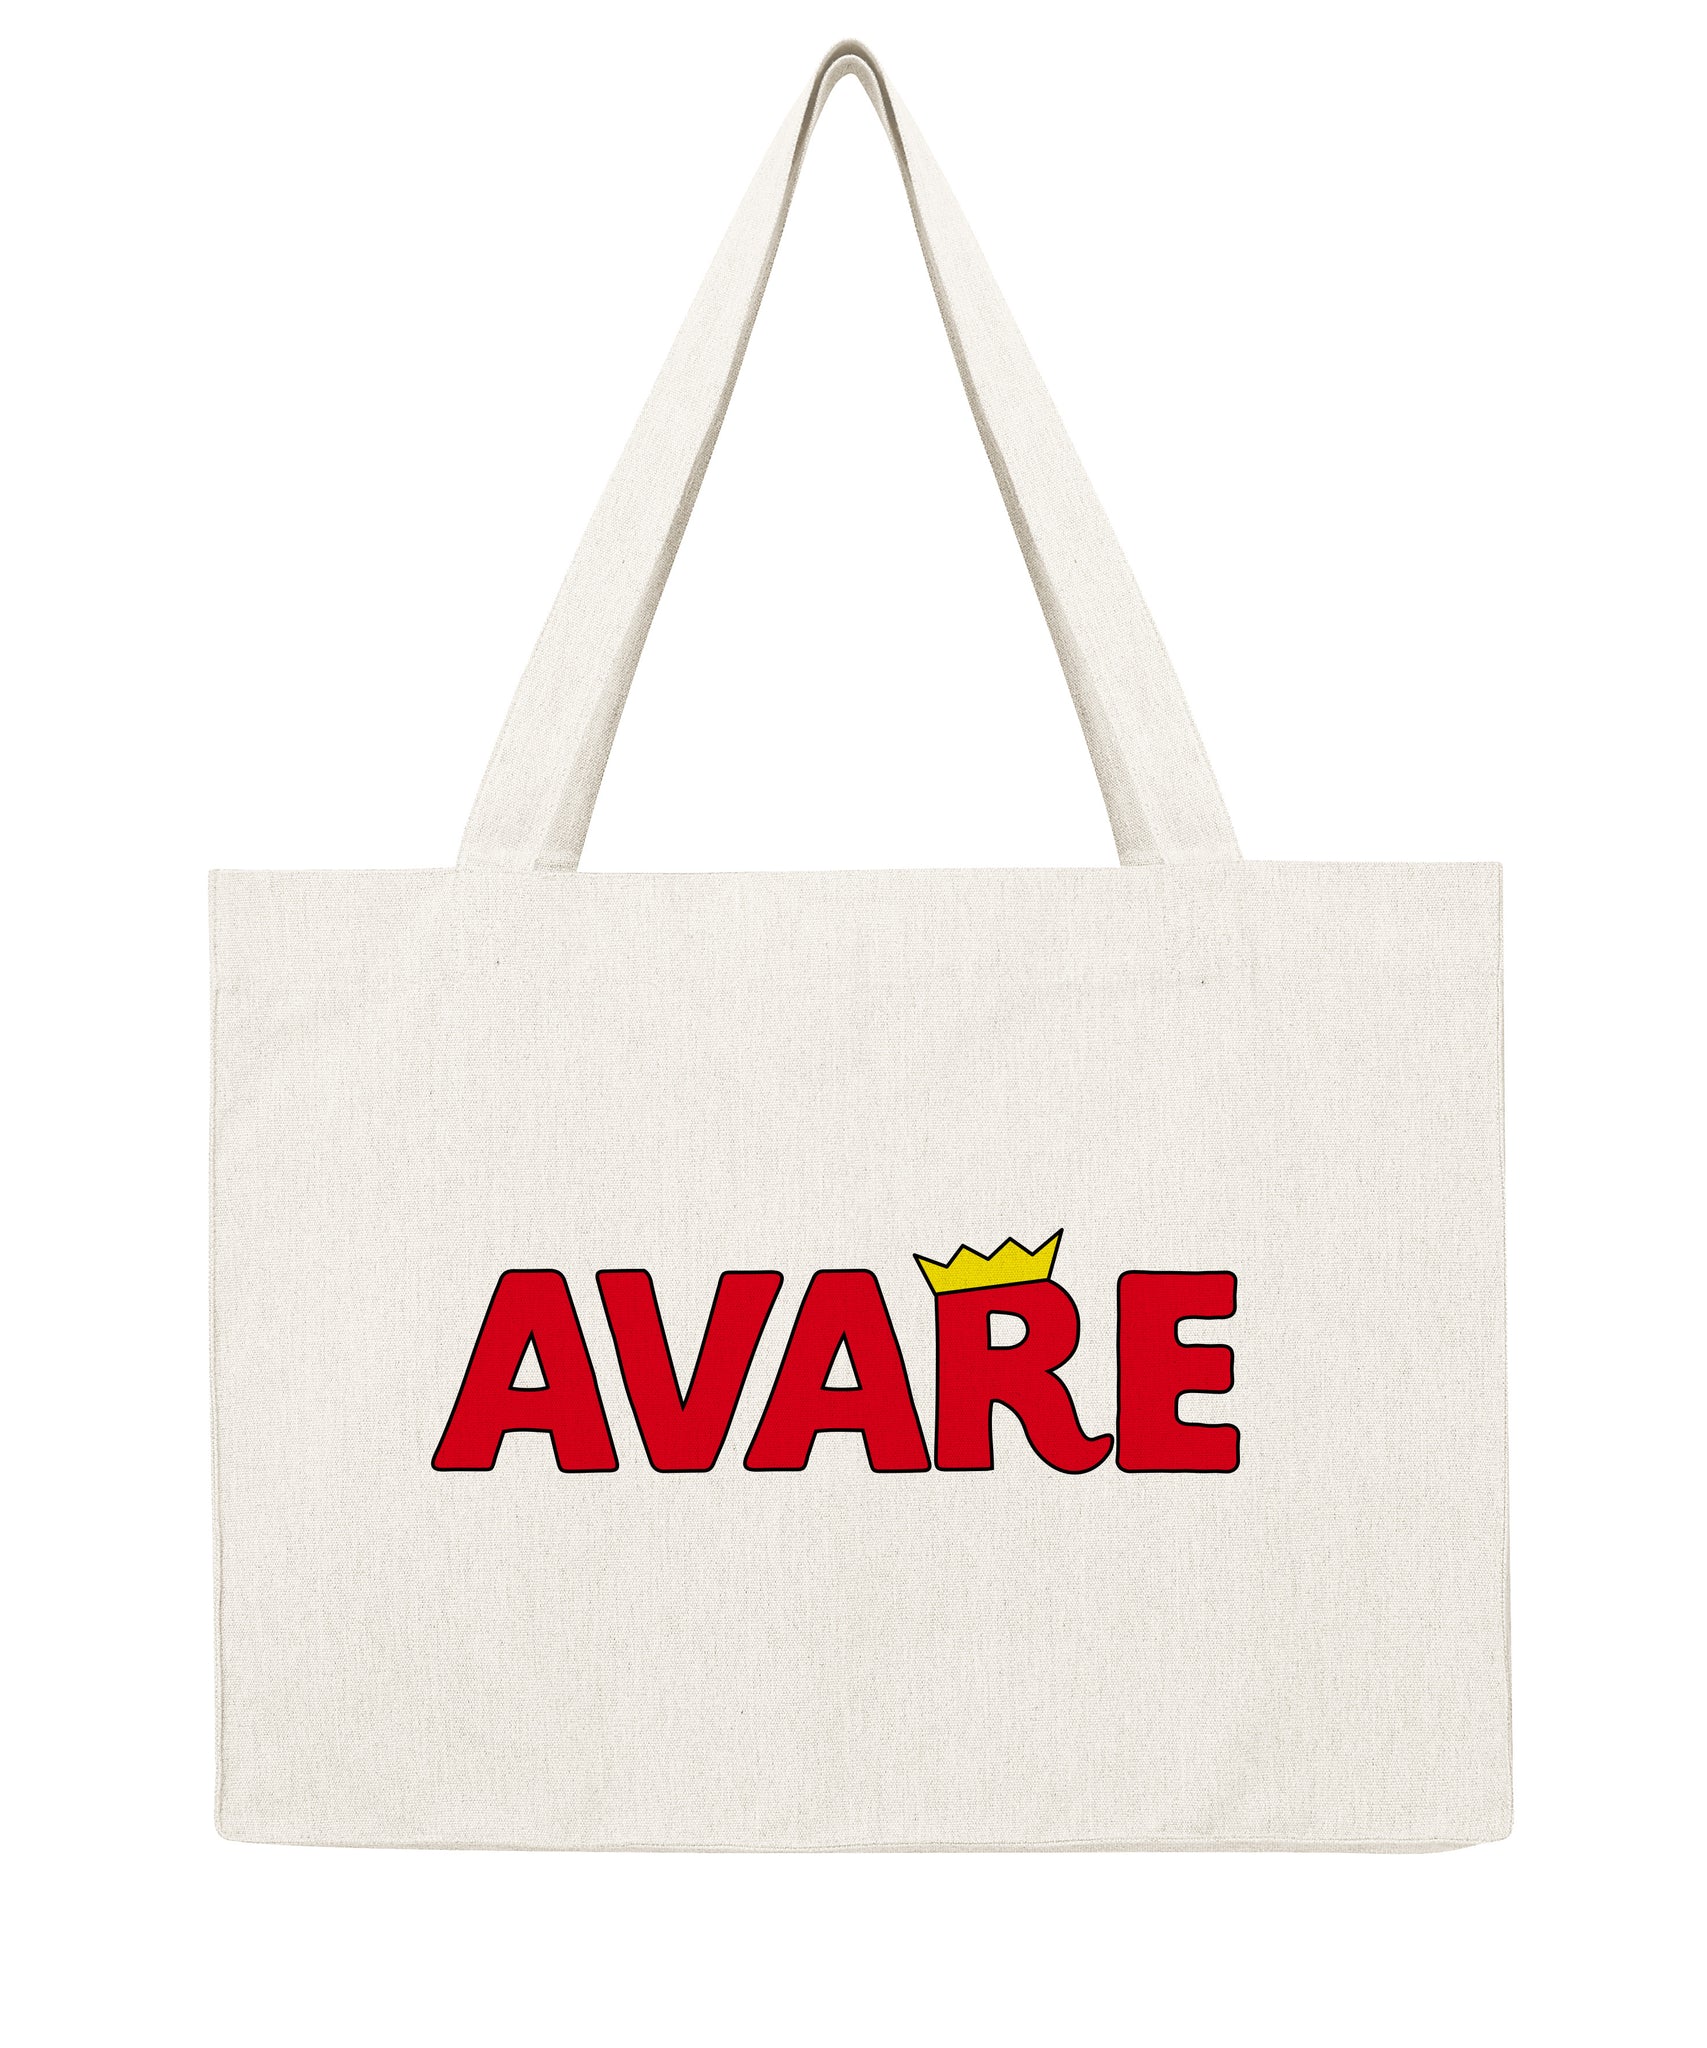 Avare - Shopping bag-Sacs-Atelier Amelot